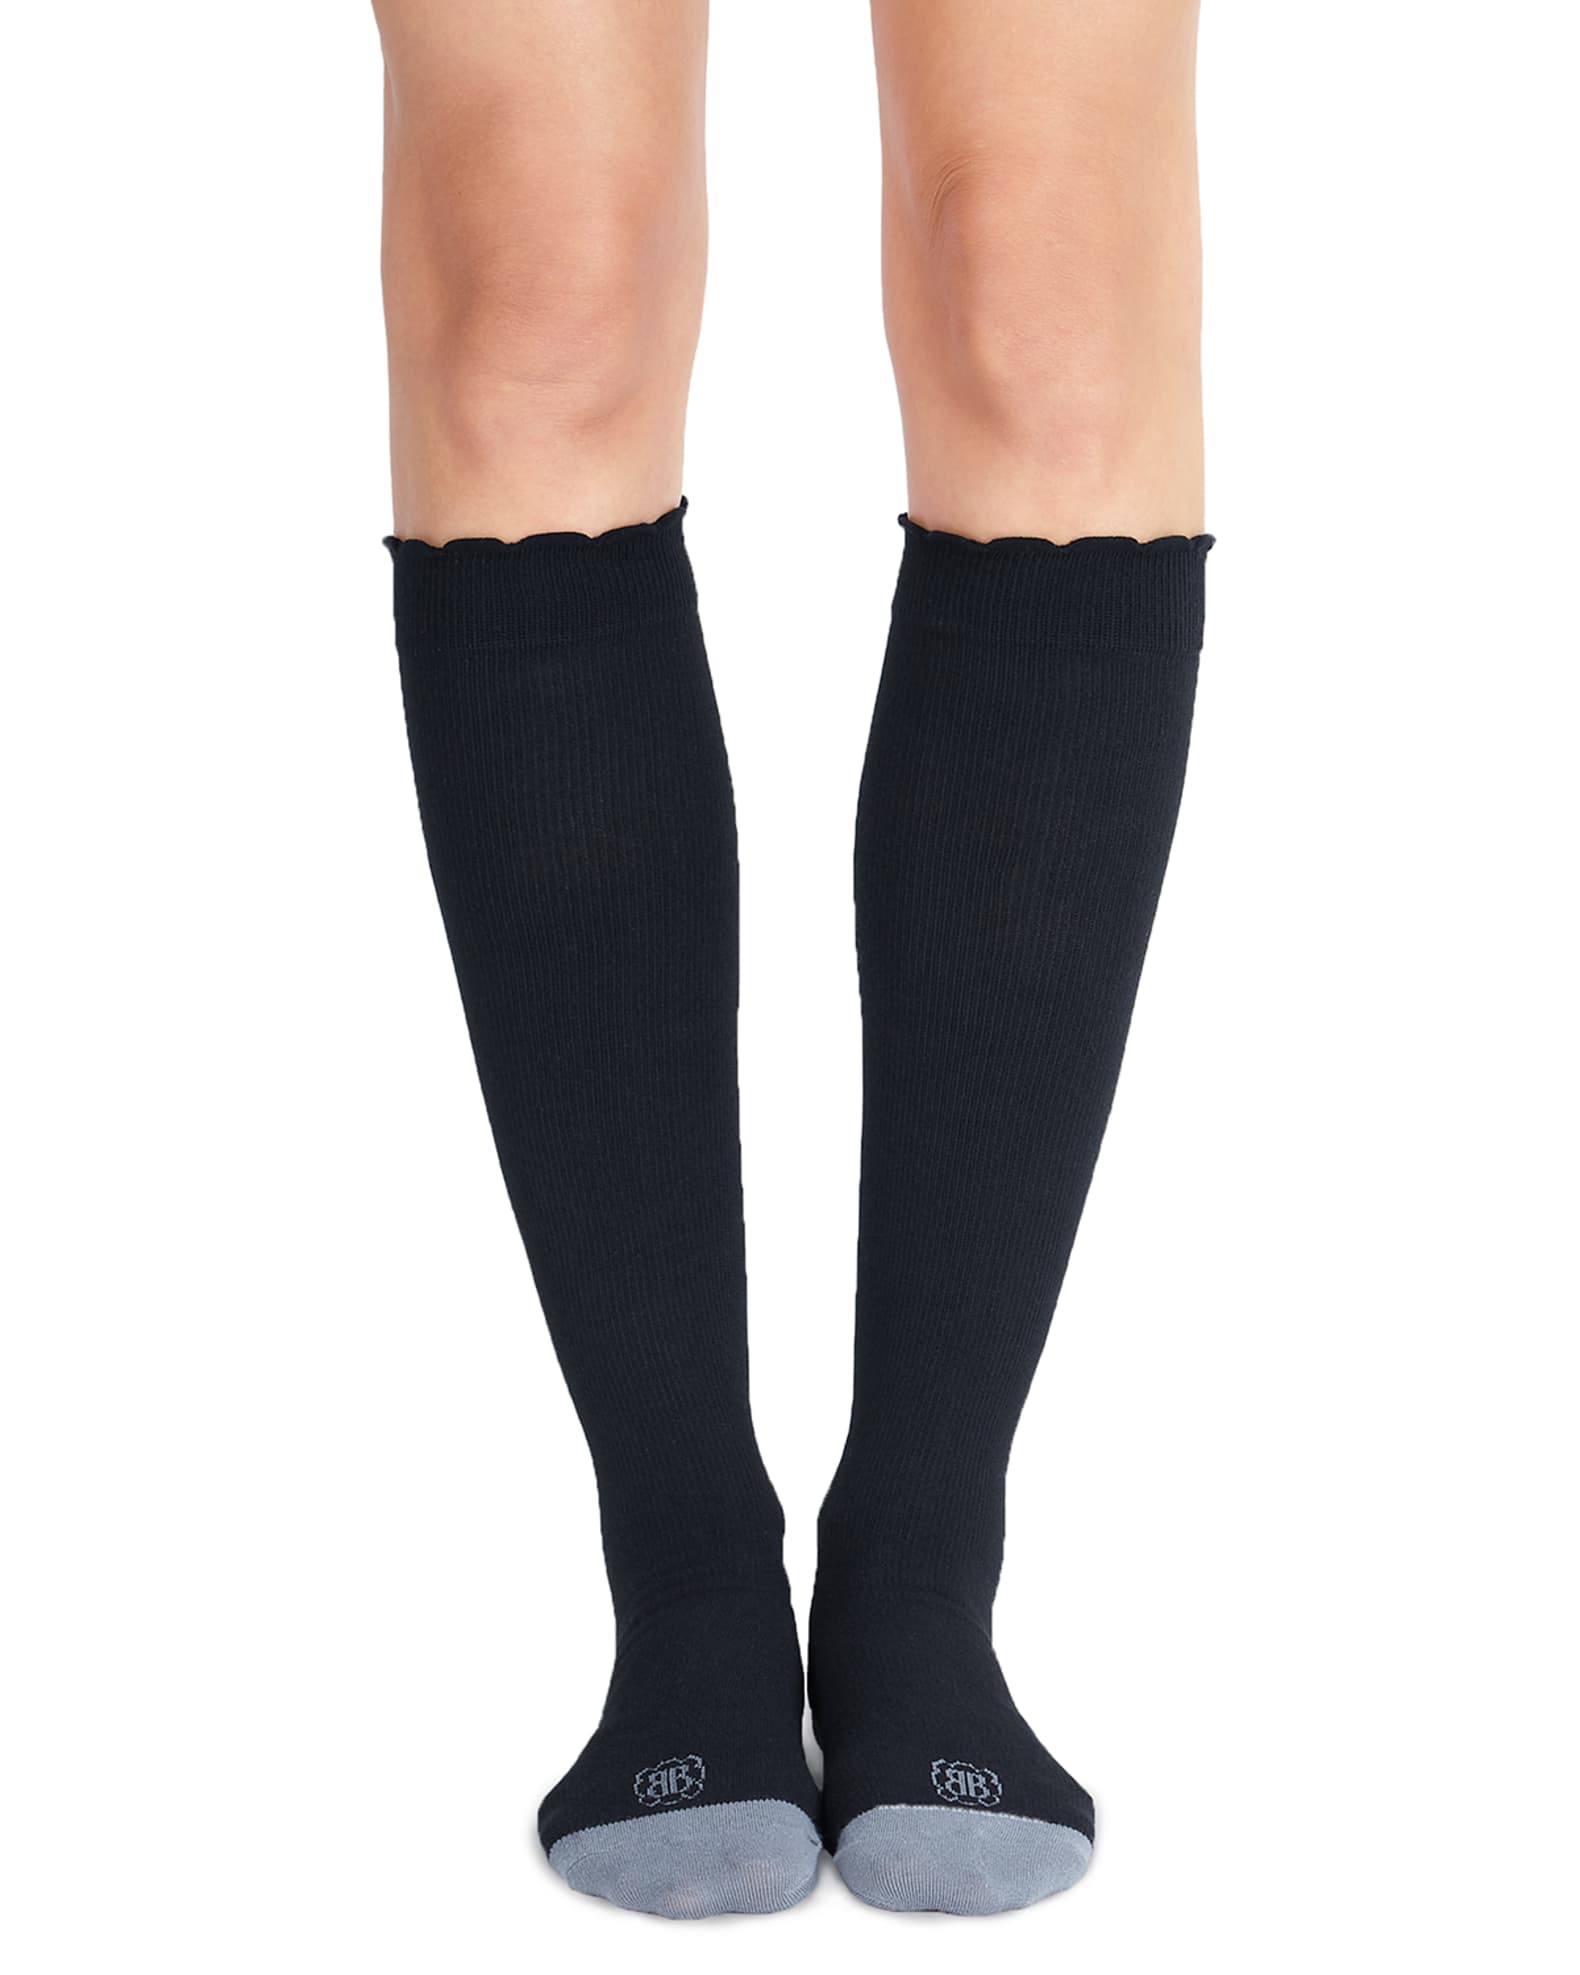 Belly Bandit Compression Knee Socks | Neiman Marcus